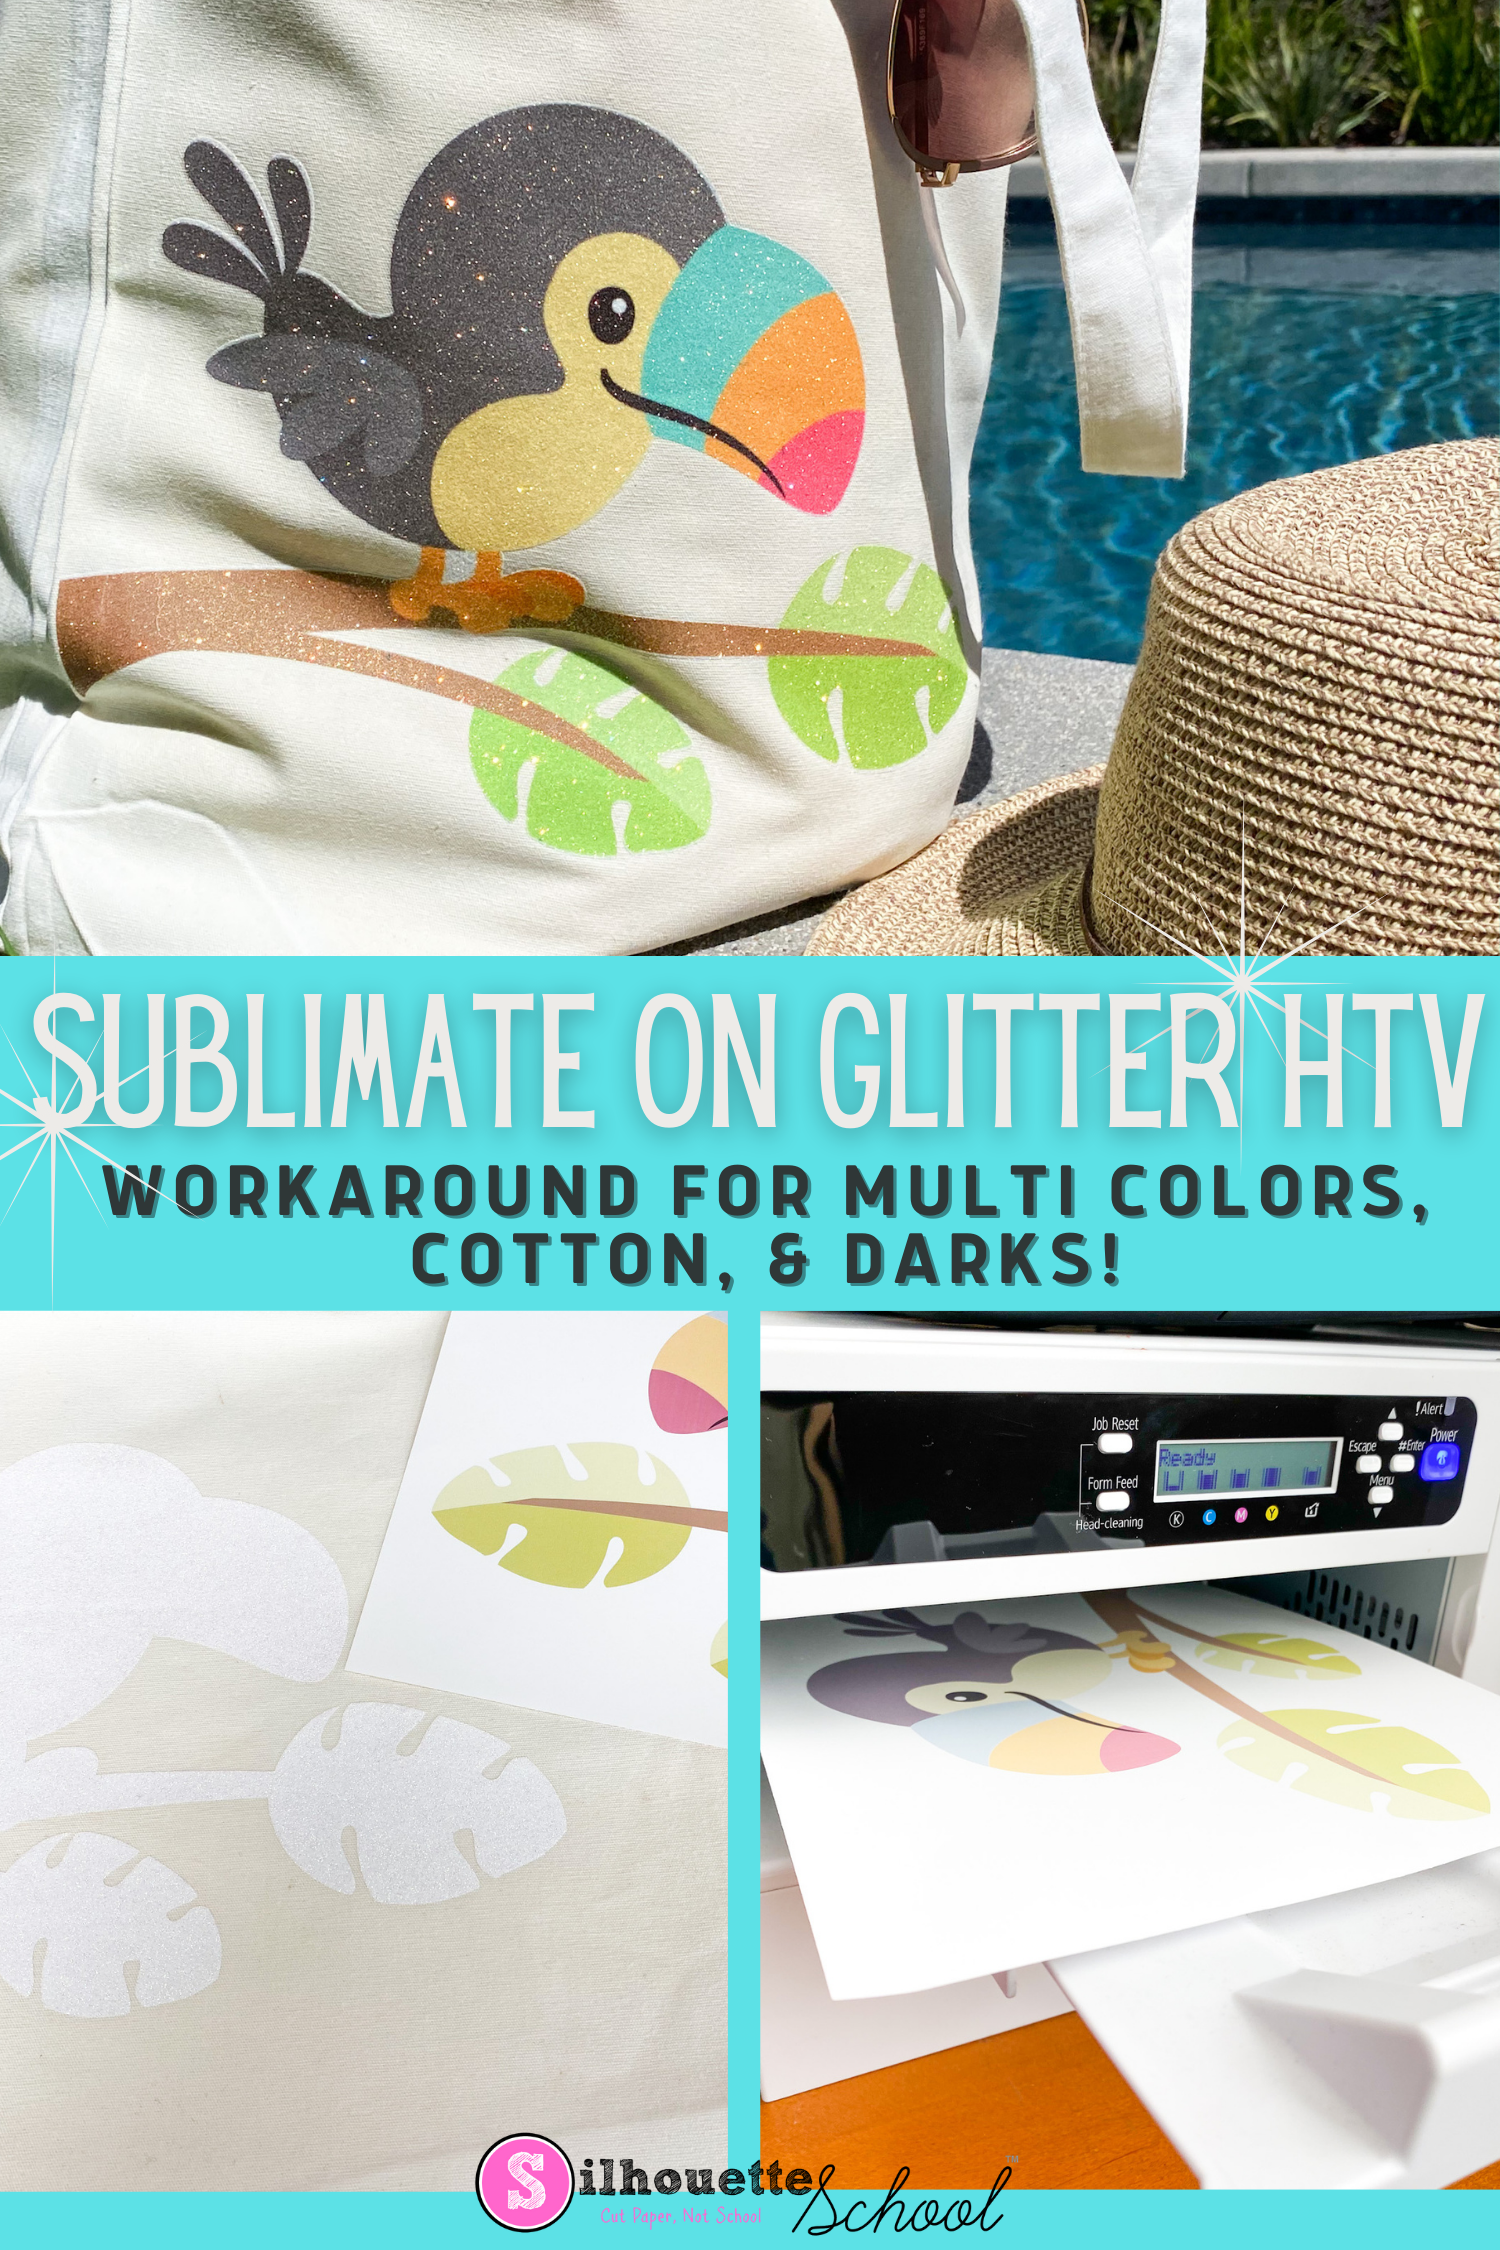 Sublimate on Cotton Using White Glitter HTV - Silhouette School